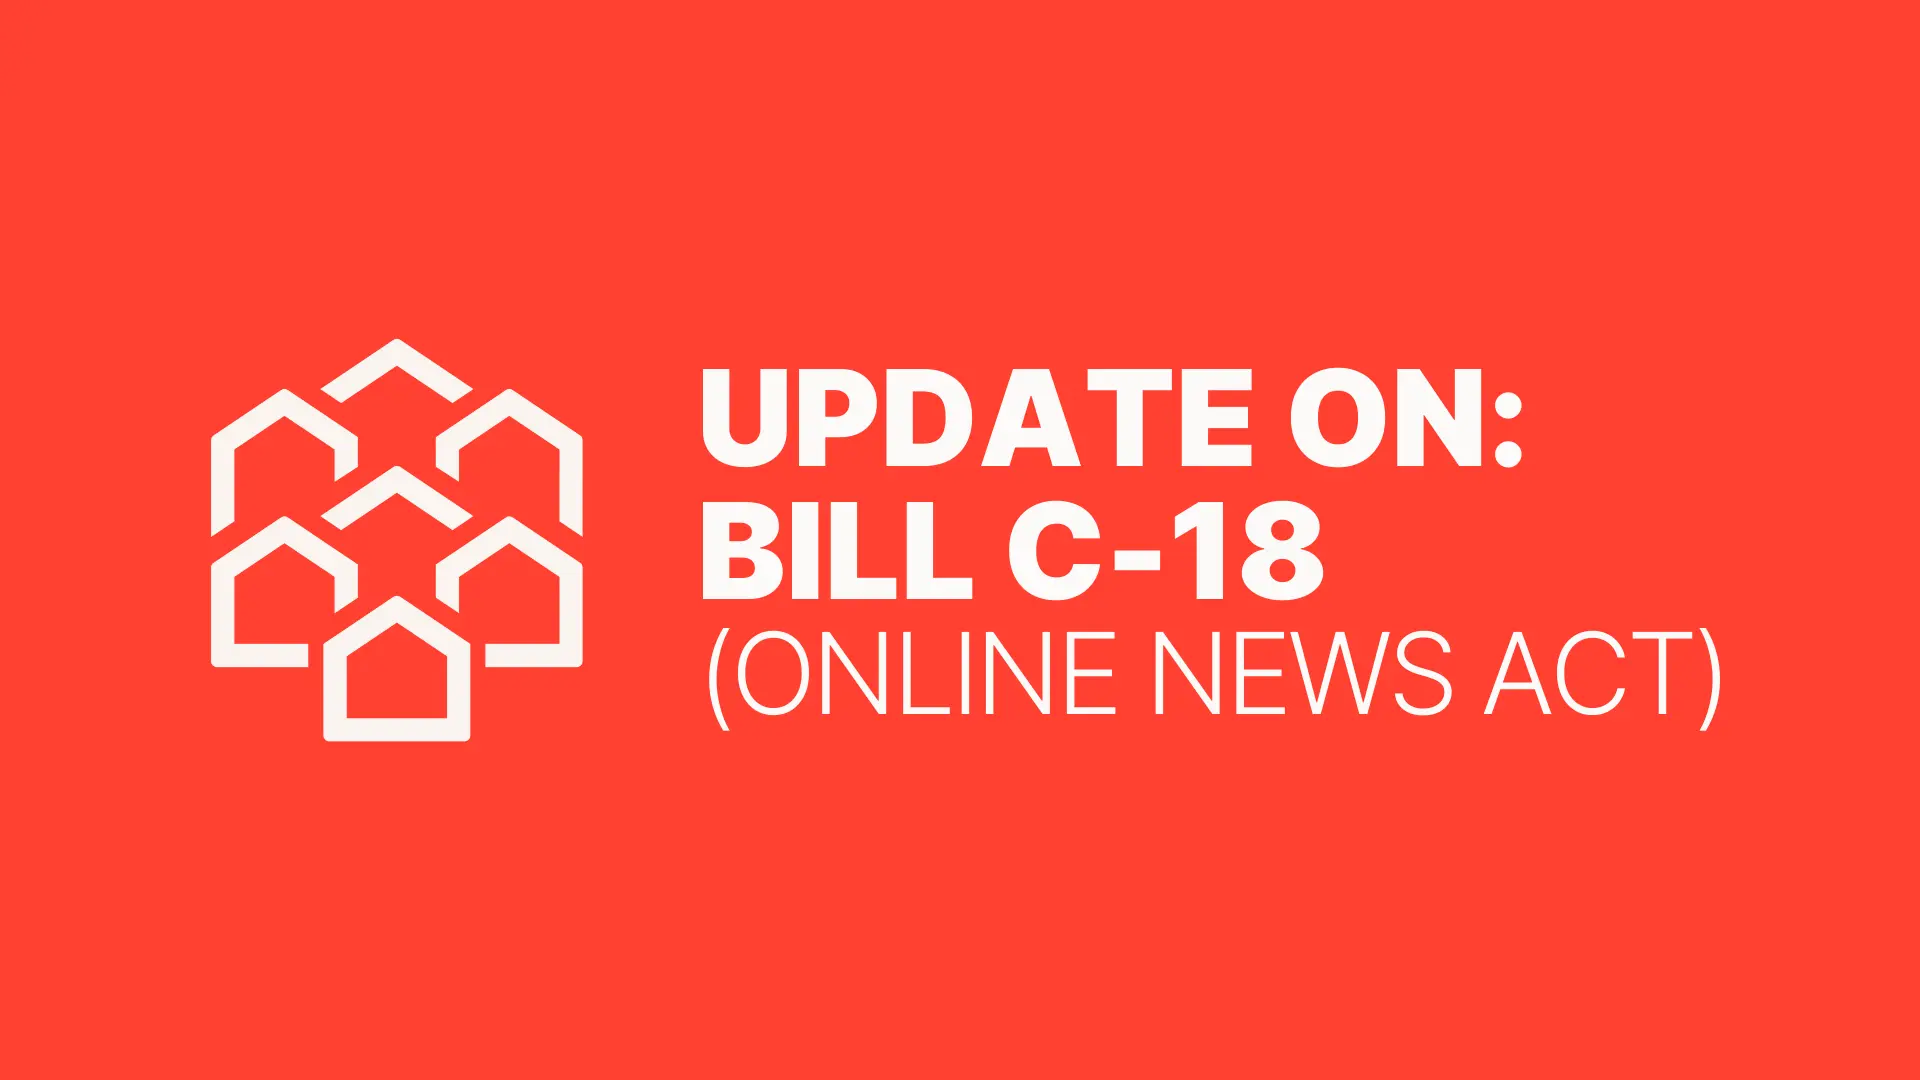 Online News Act Update